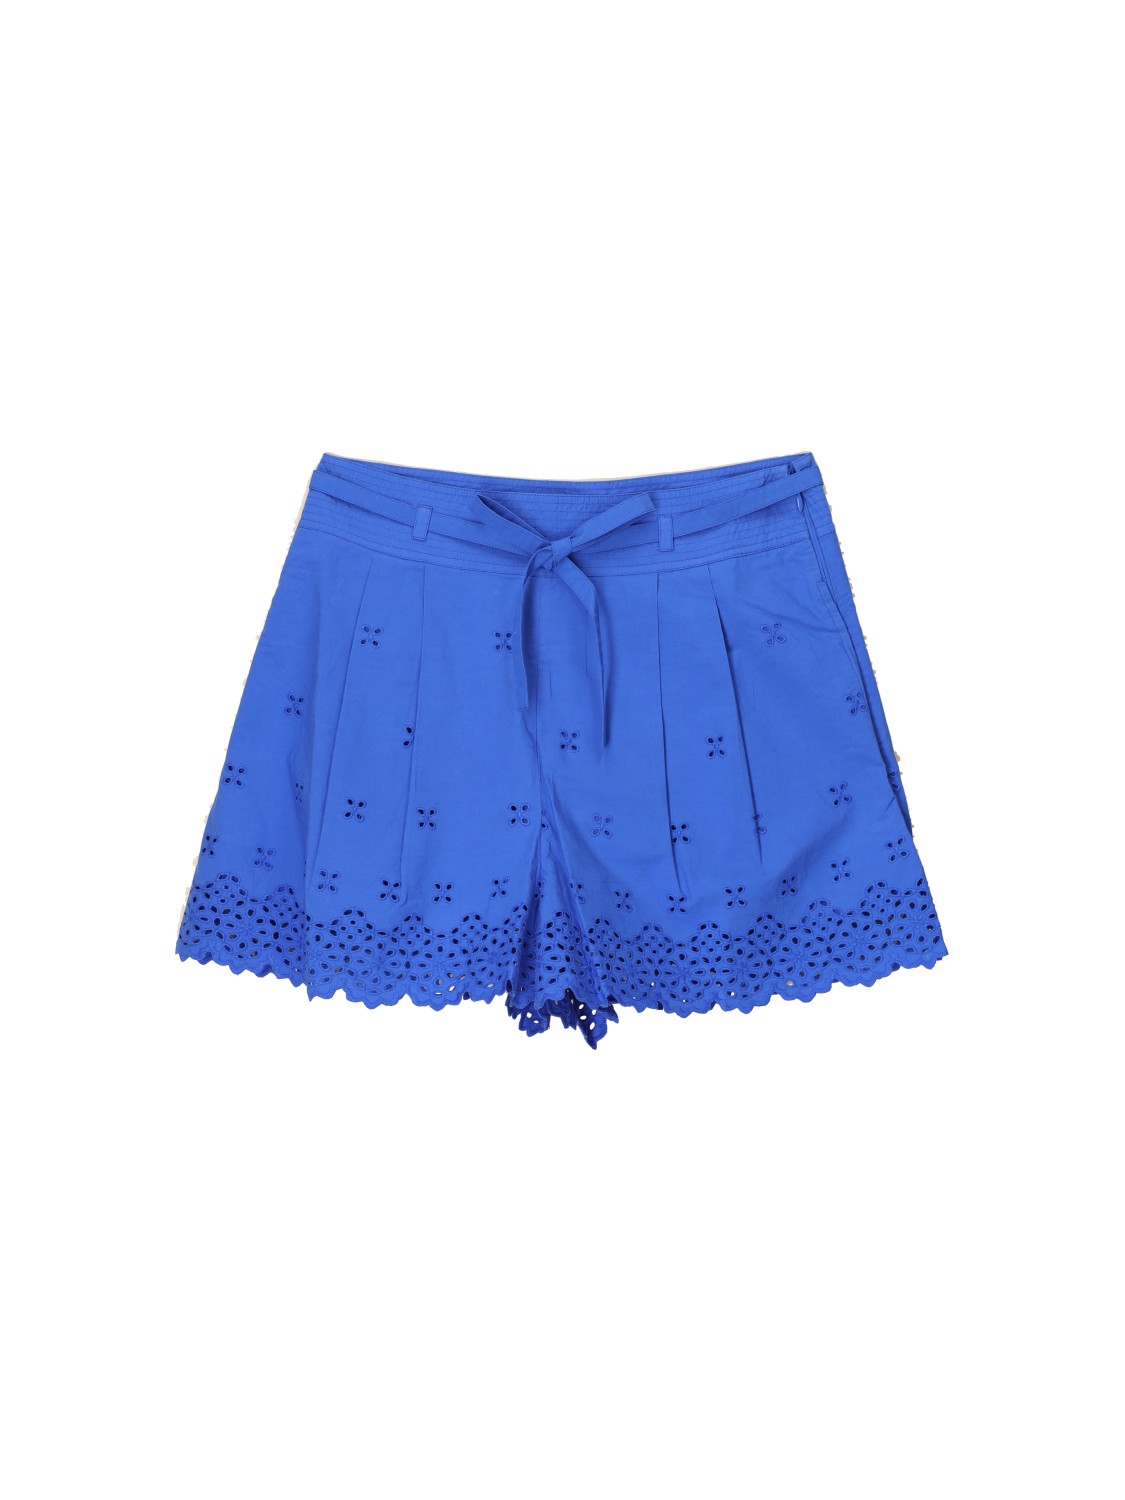 Ulla Johnson Sabine Shorts – cotton shorts with a hole pattern  blue 34